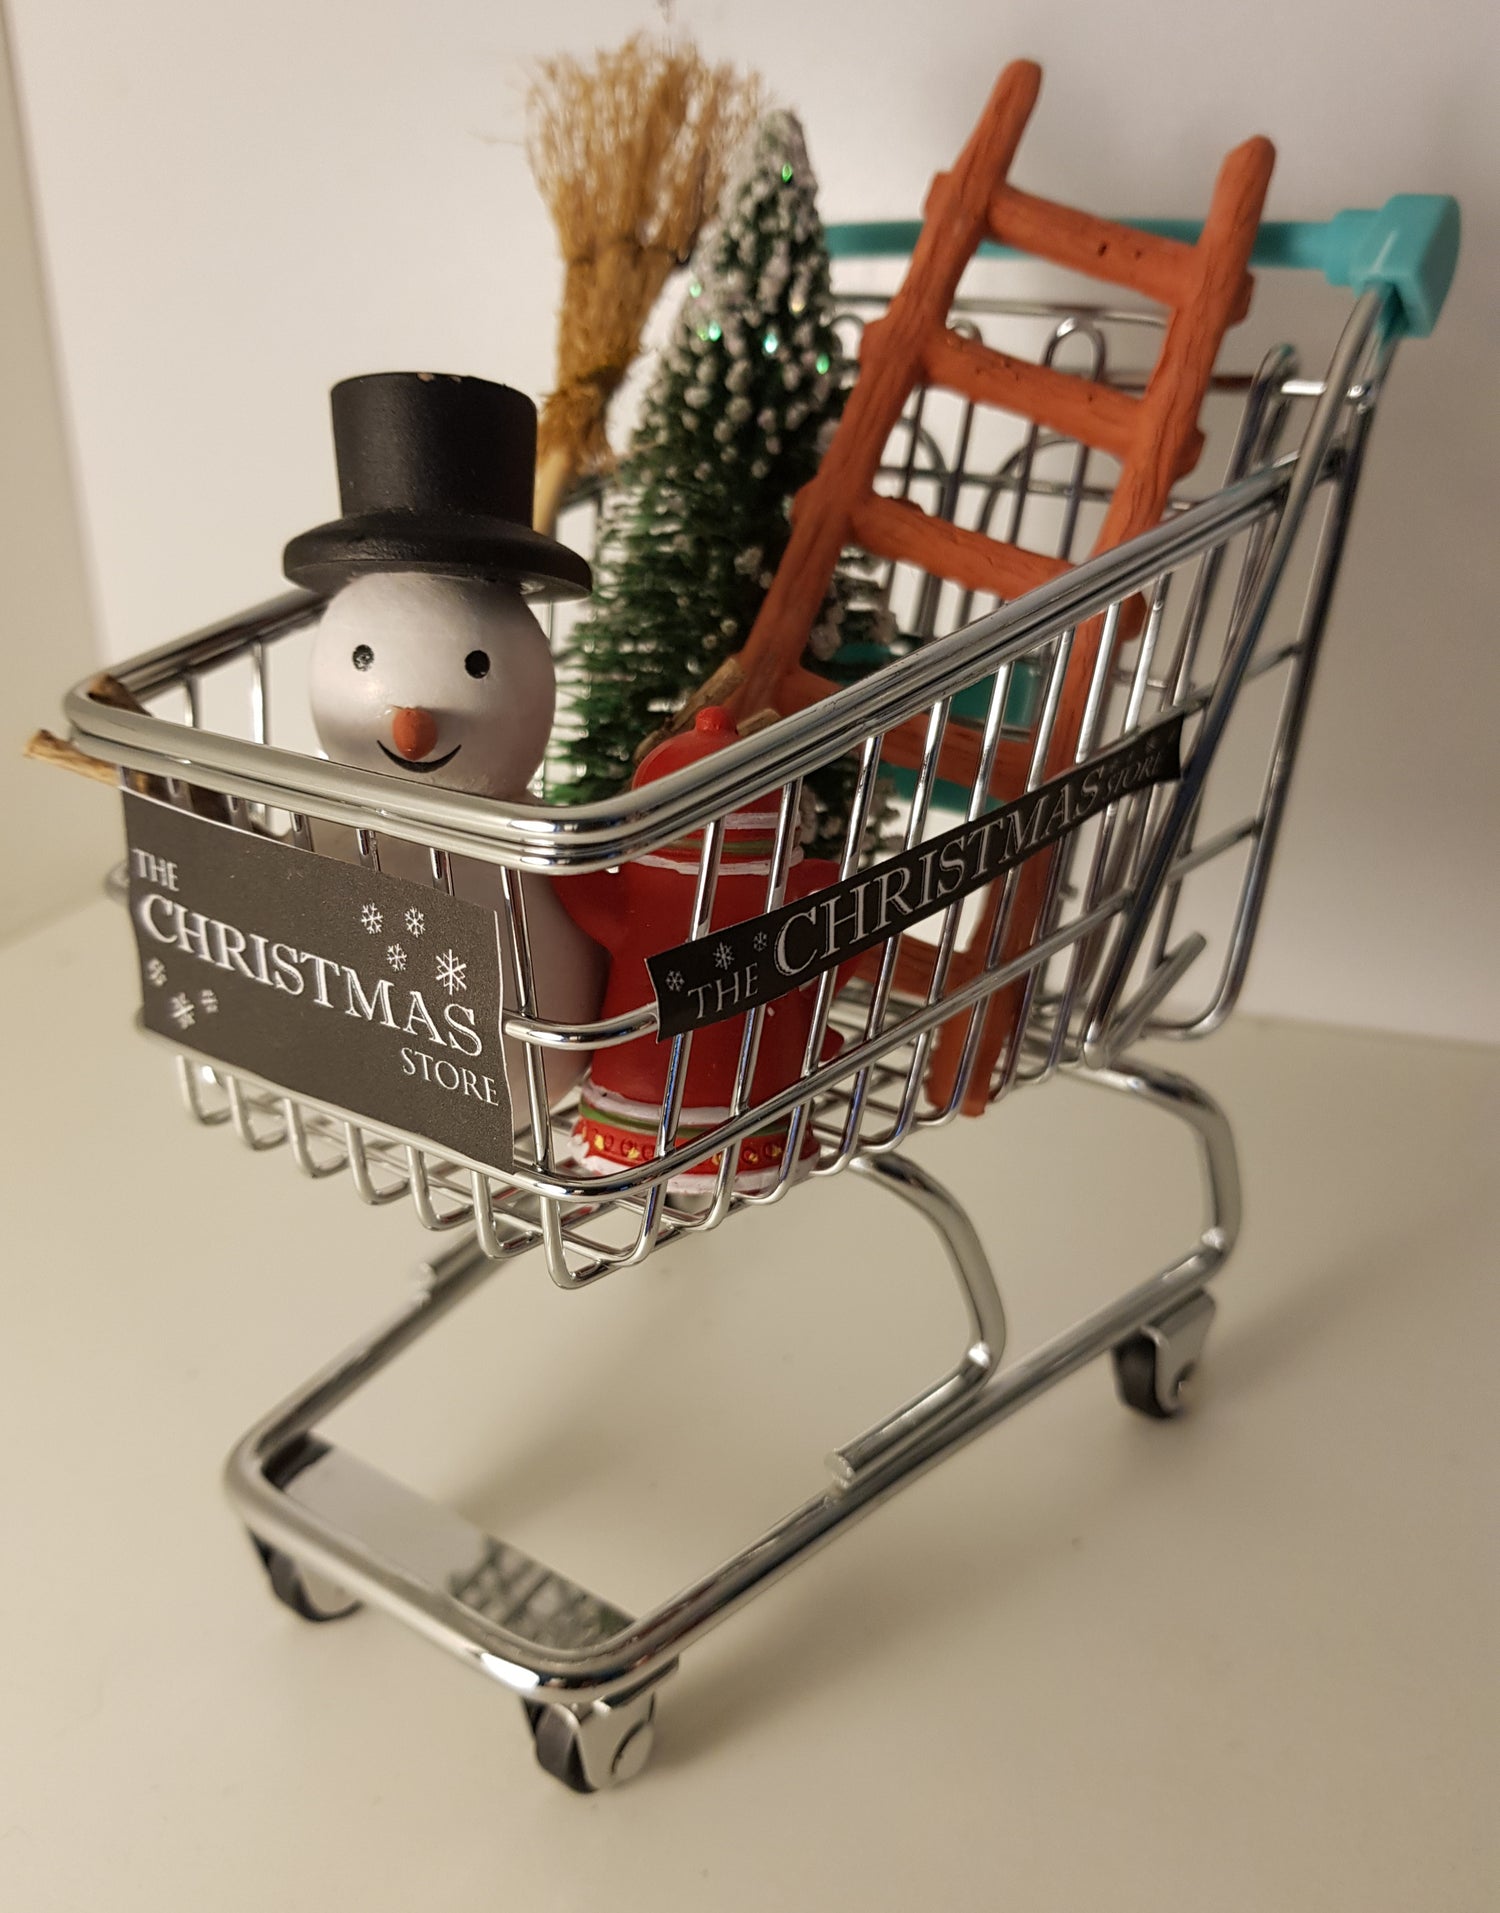 Alla Produkter - The Christmas Store - Sverige